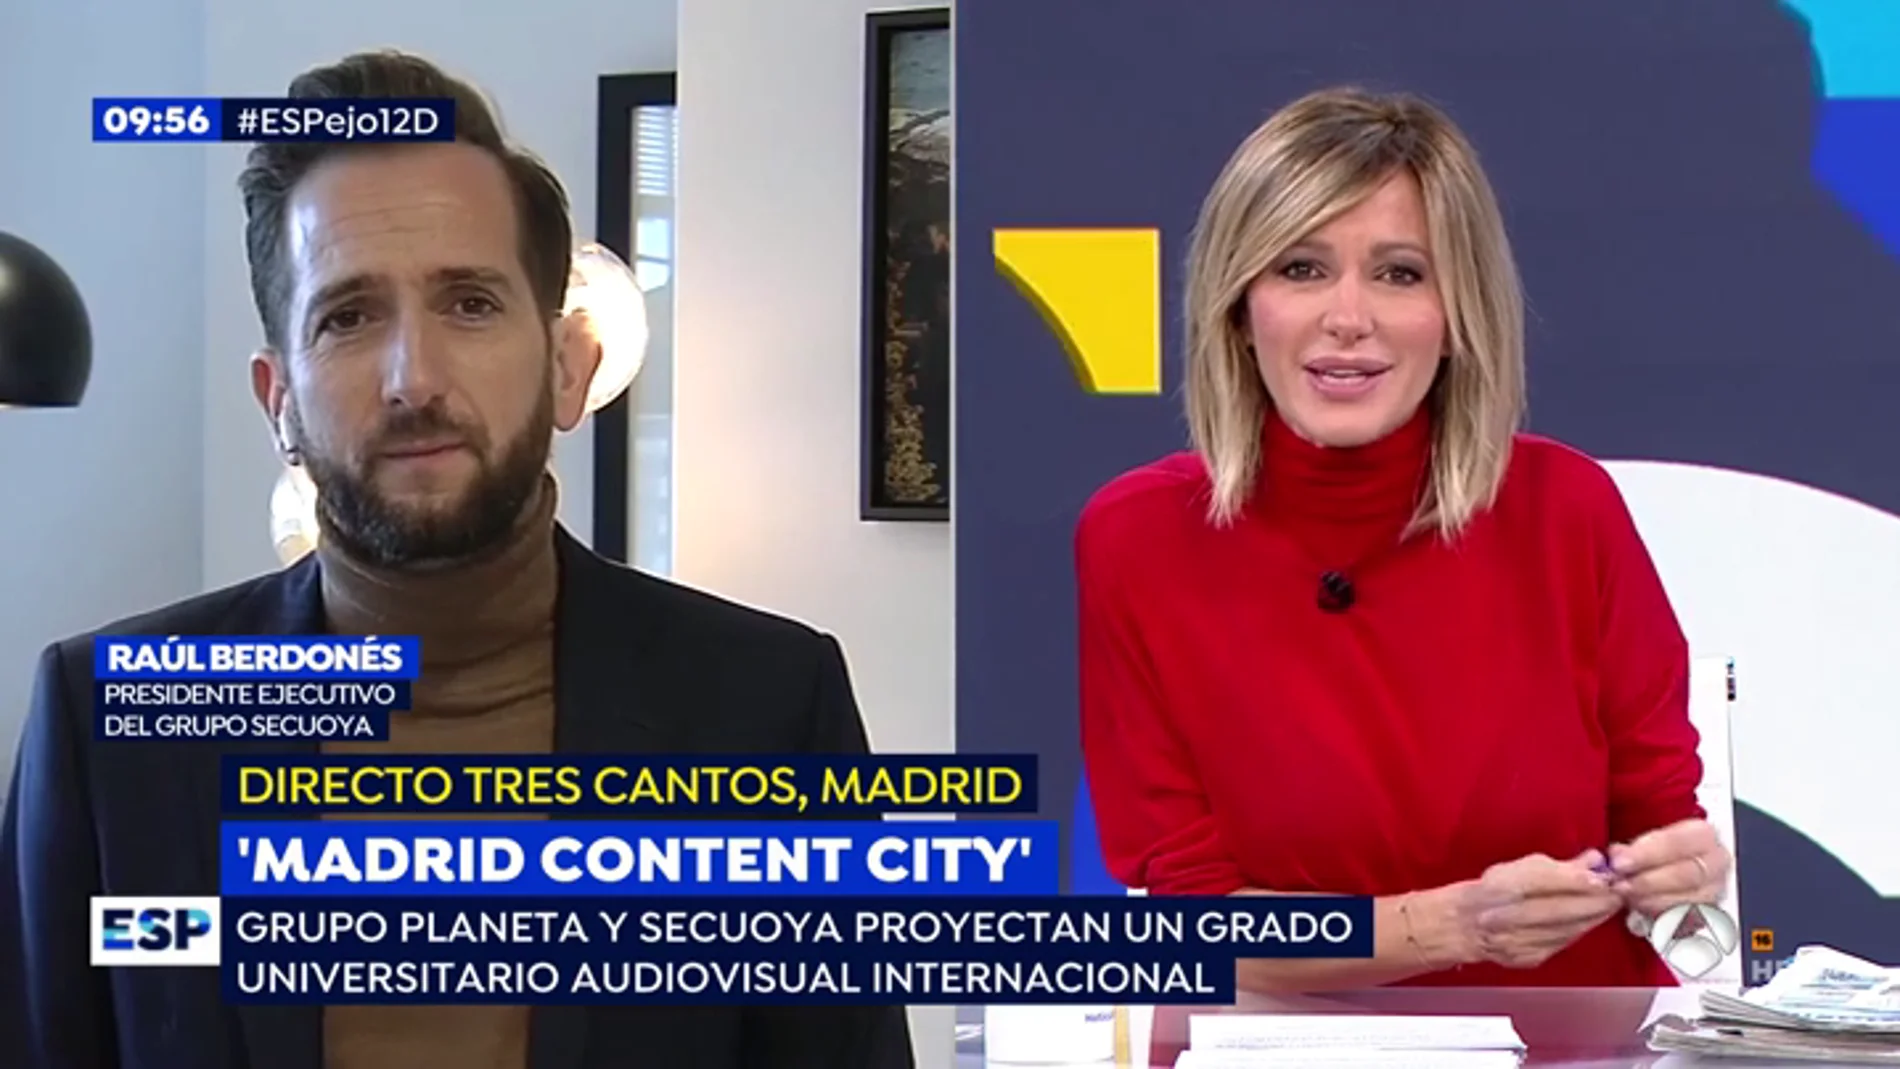 Raúl Berdonés, presidente Ejecutivo del grupo Sequoya: "'Madrid Content City' será la mayor urbe audiovisual europea"